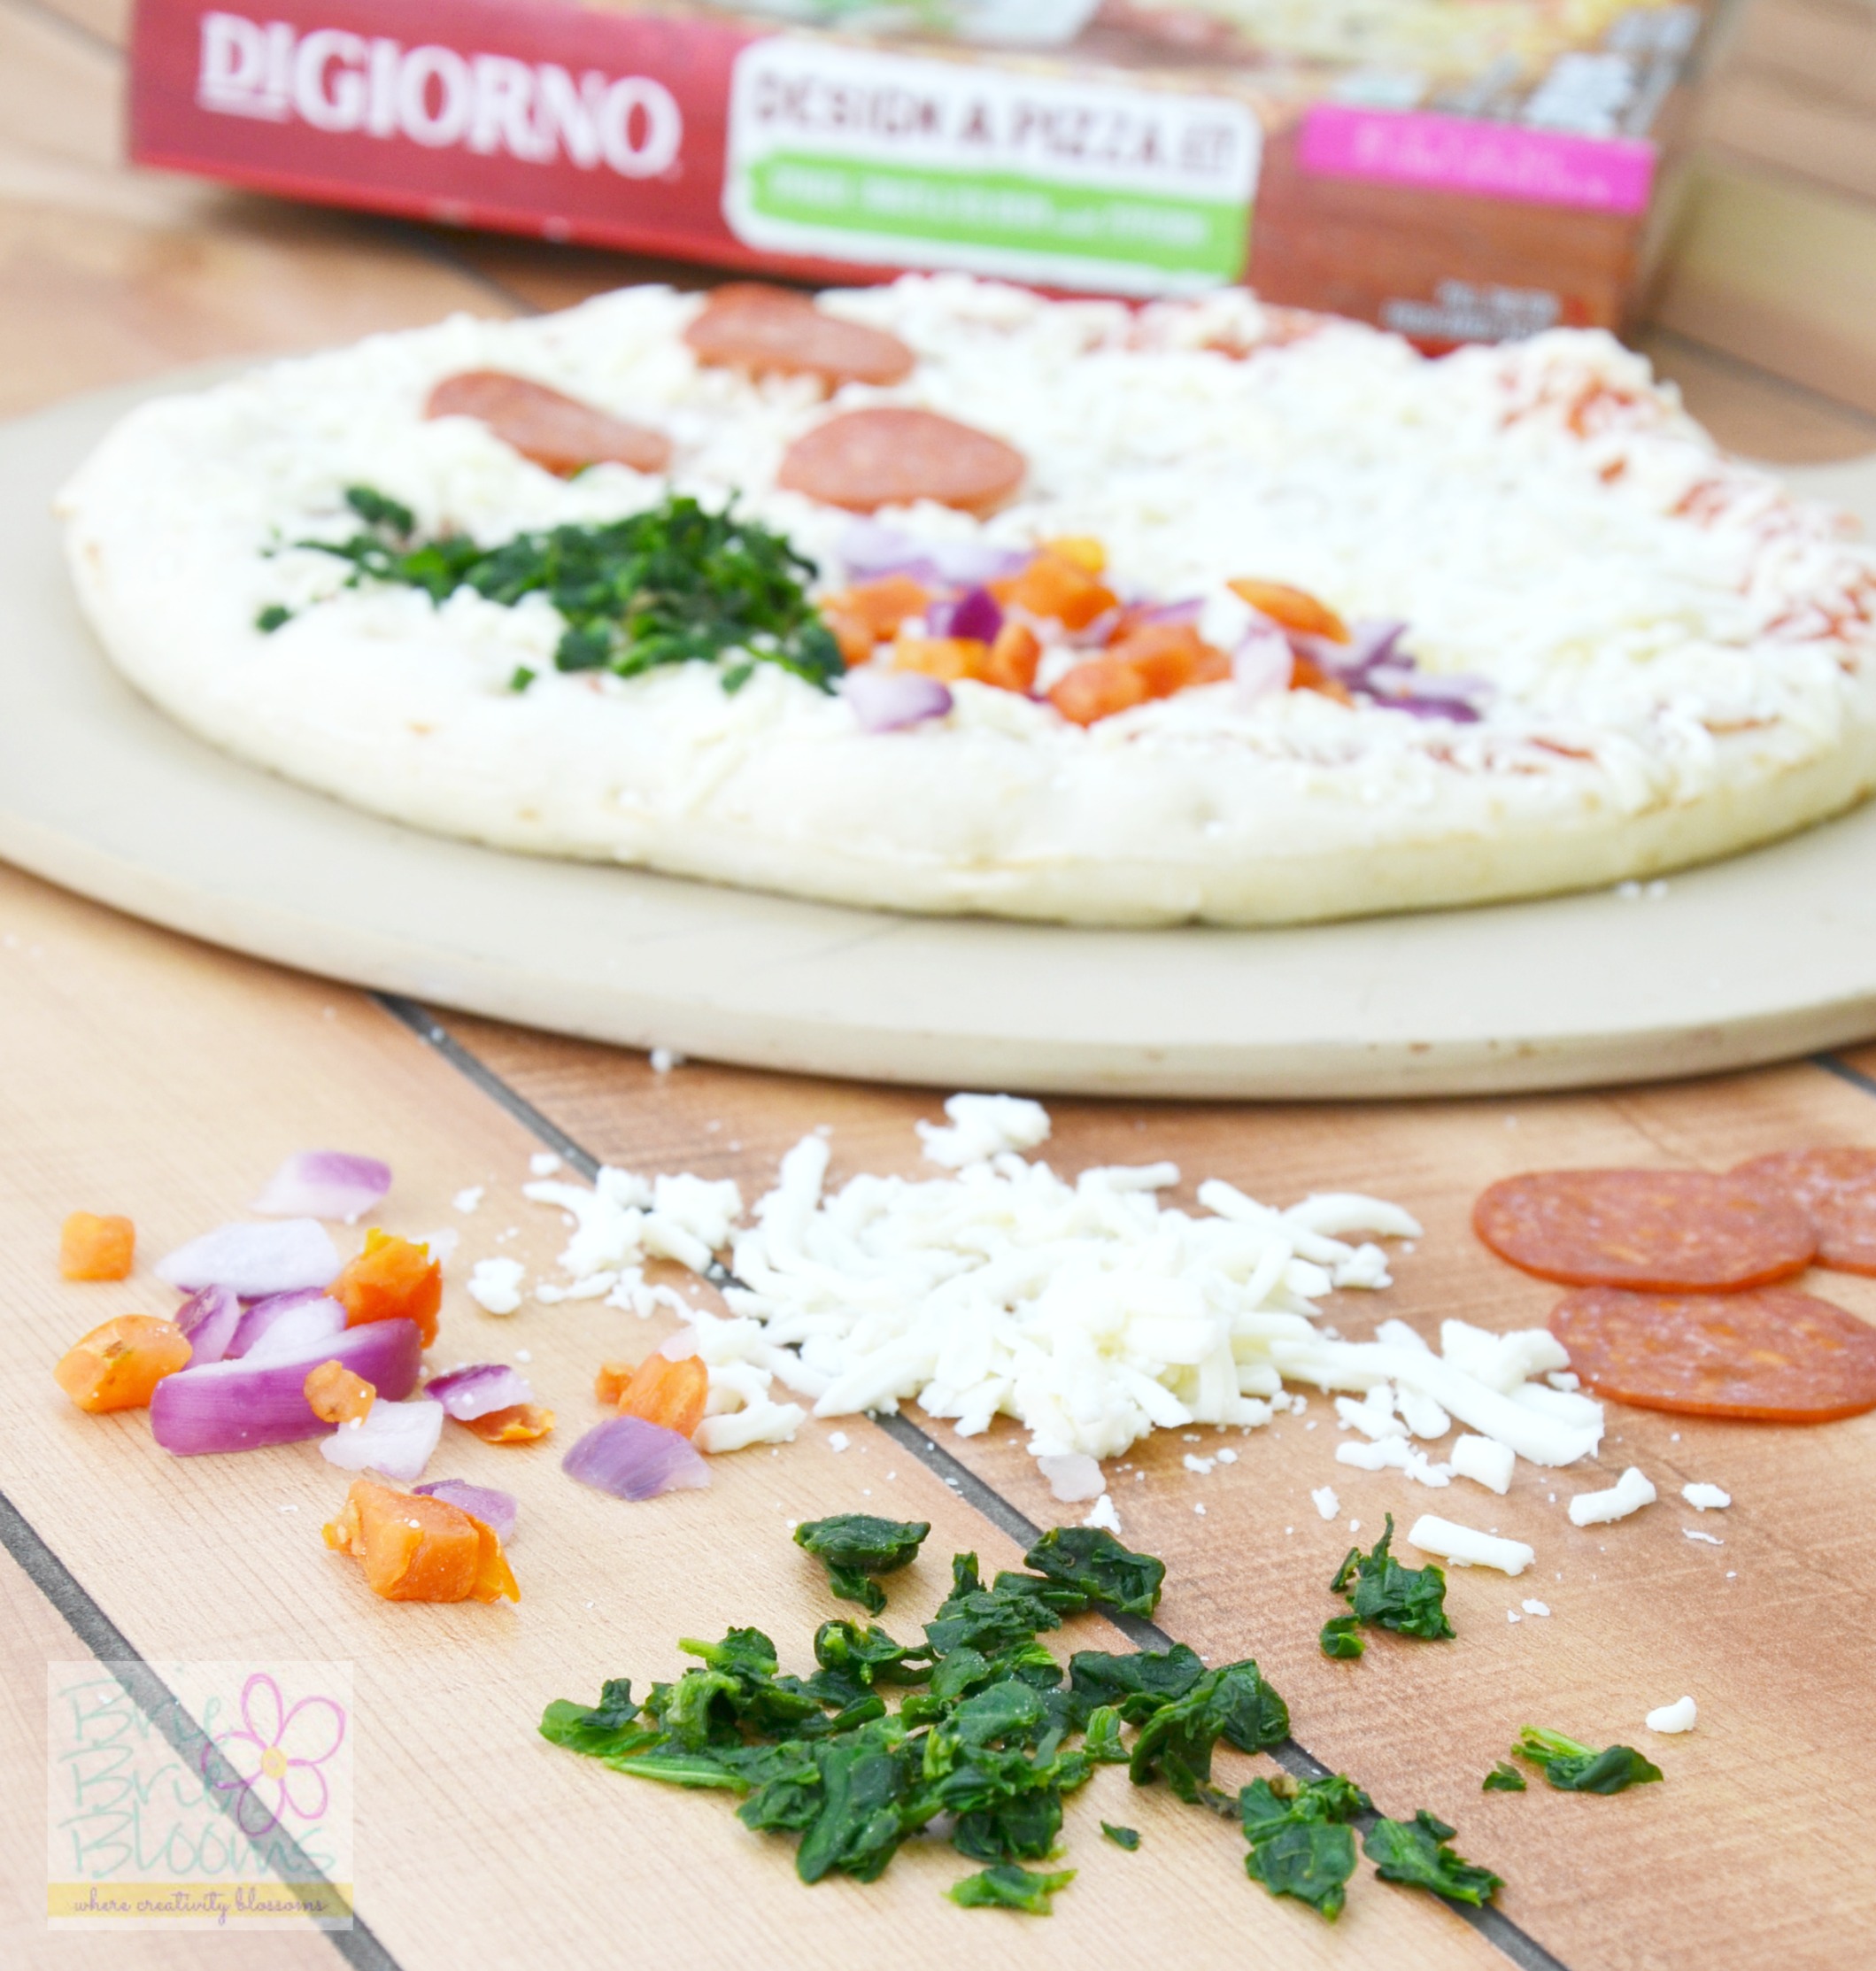 DiGiorno-fresh-ingredients-in-Design-A-Pizza